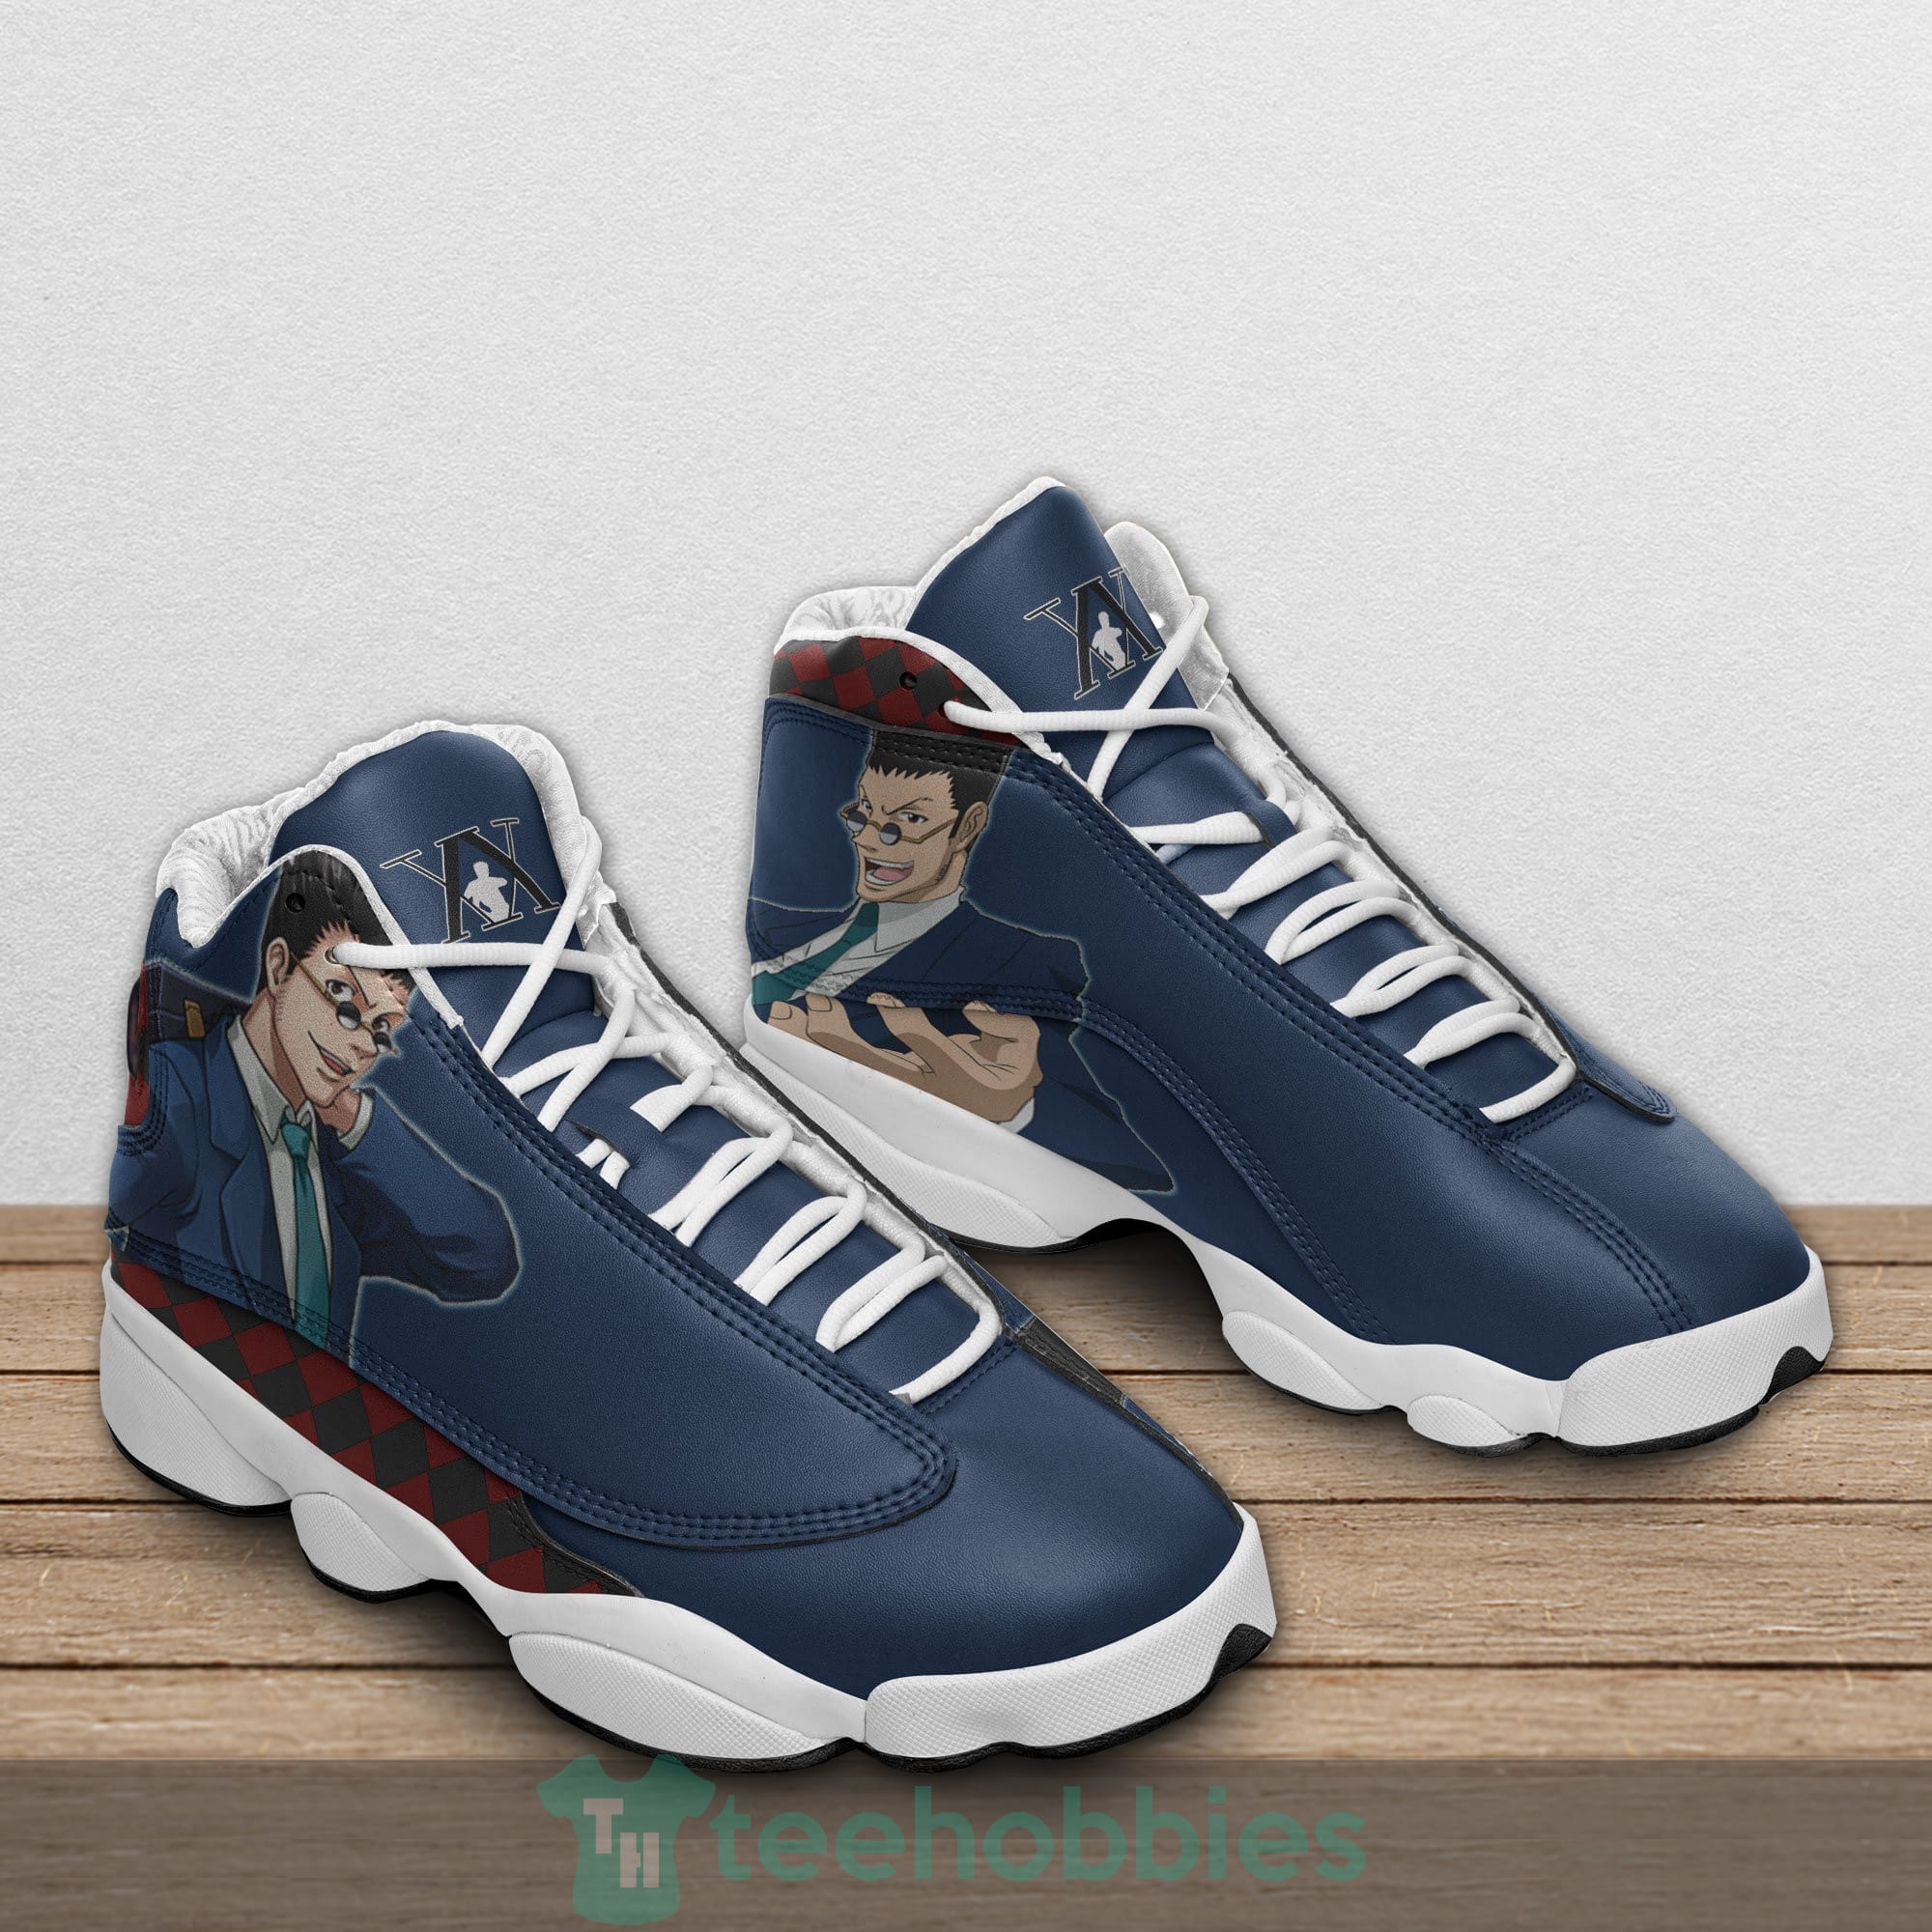 Leorio Paradinight Custom Hunter Anime Air Jordan 13 Shoes Product photo 2